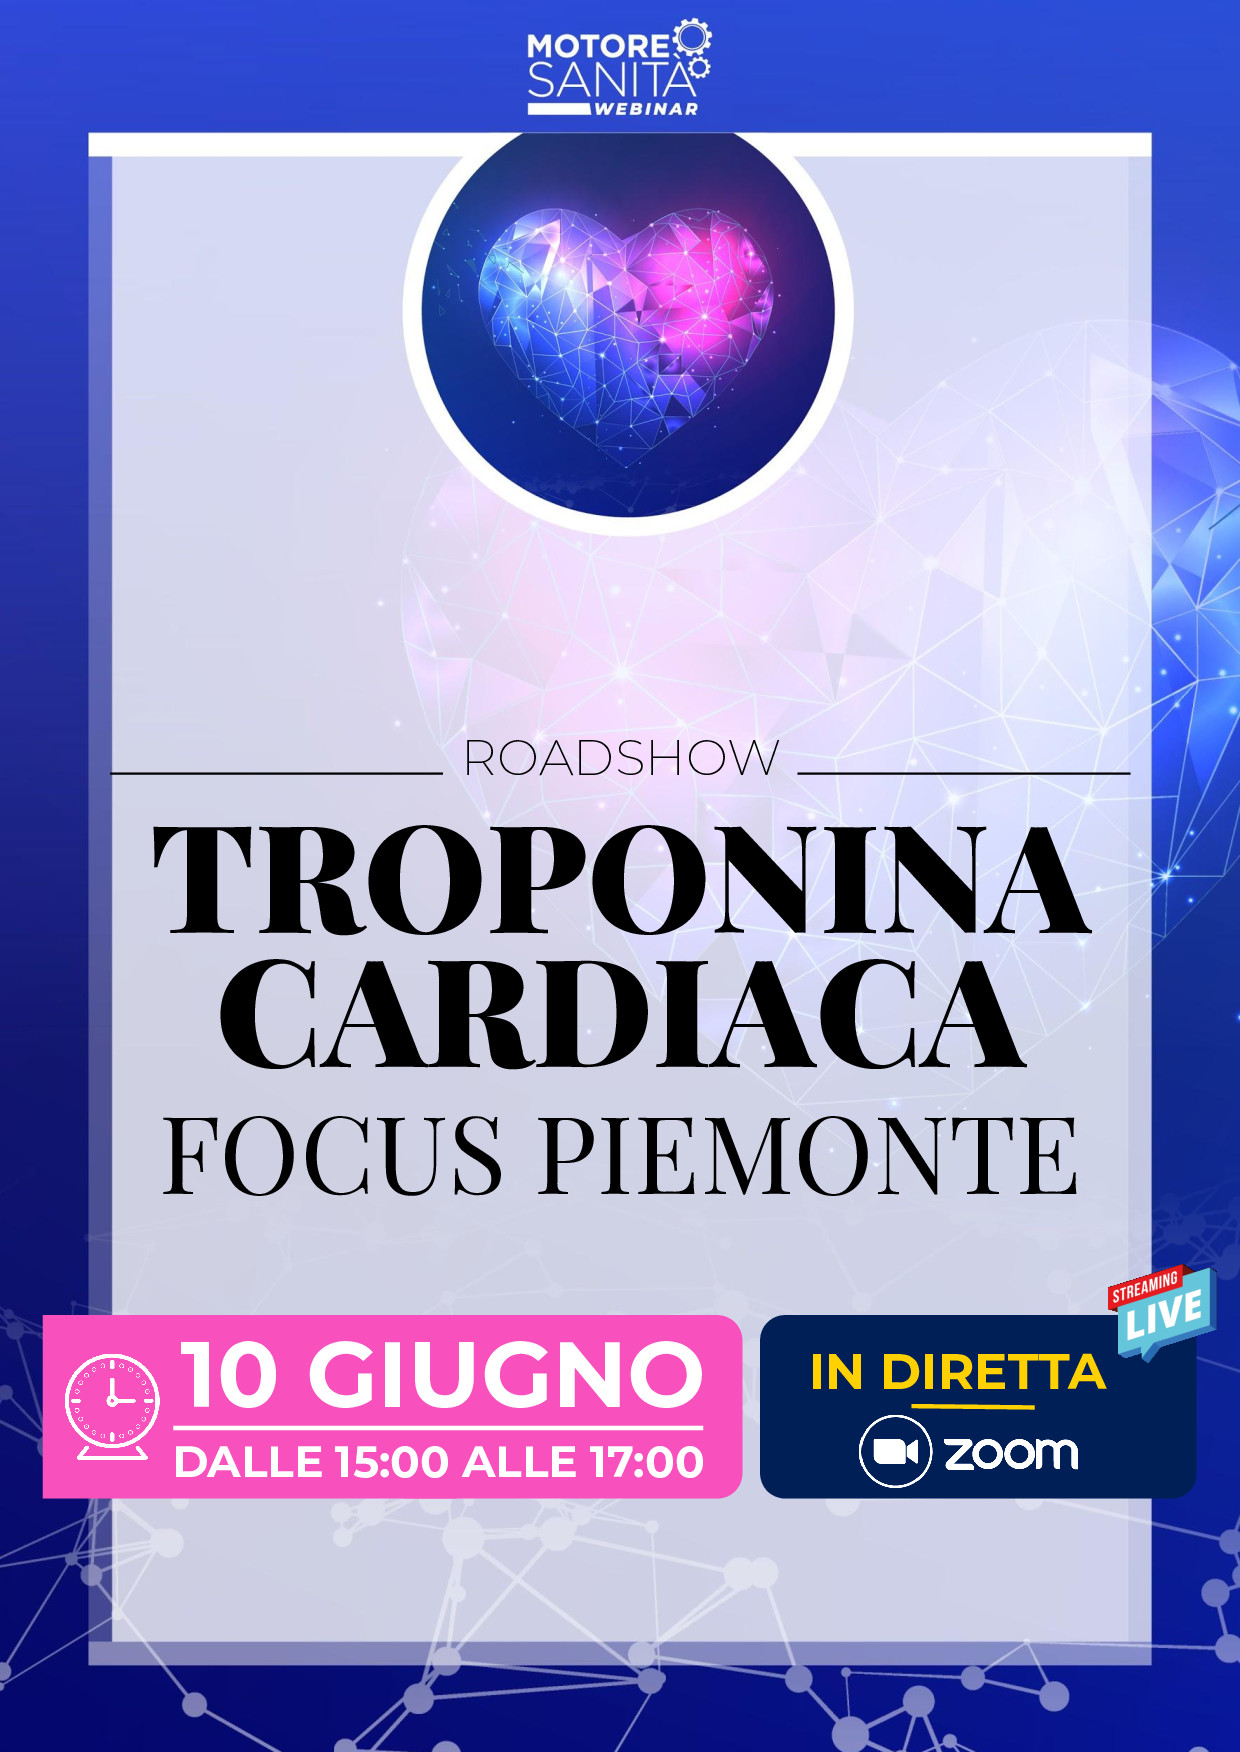 Roadshow Troponina cardiaca. Focus Piemonte